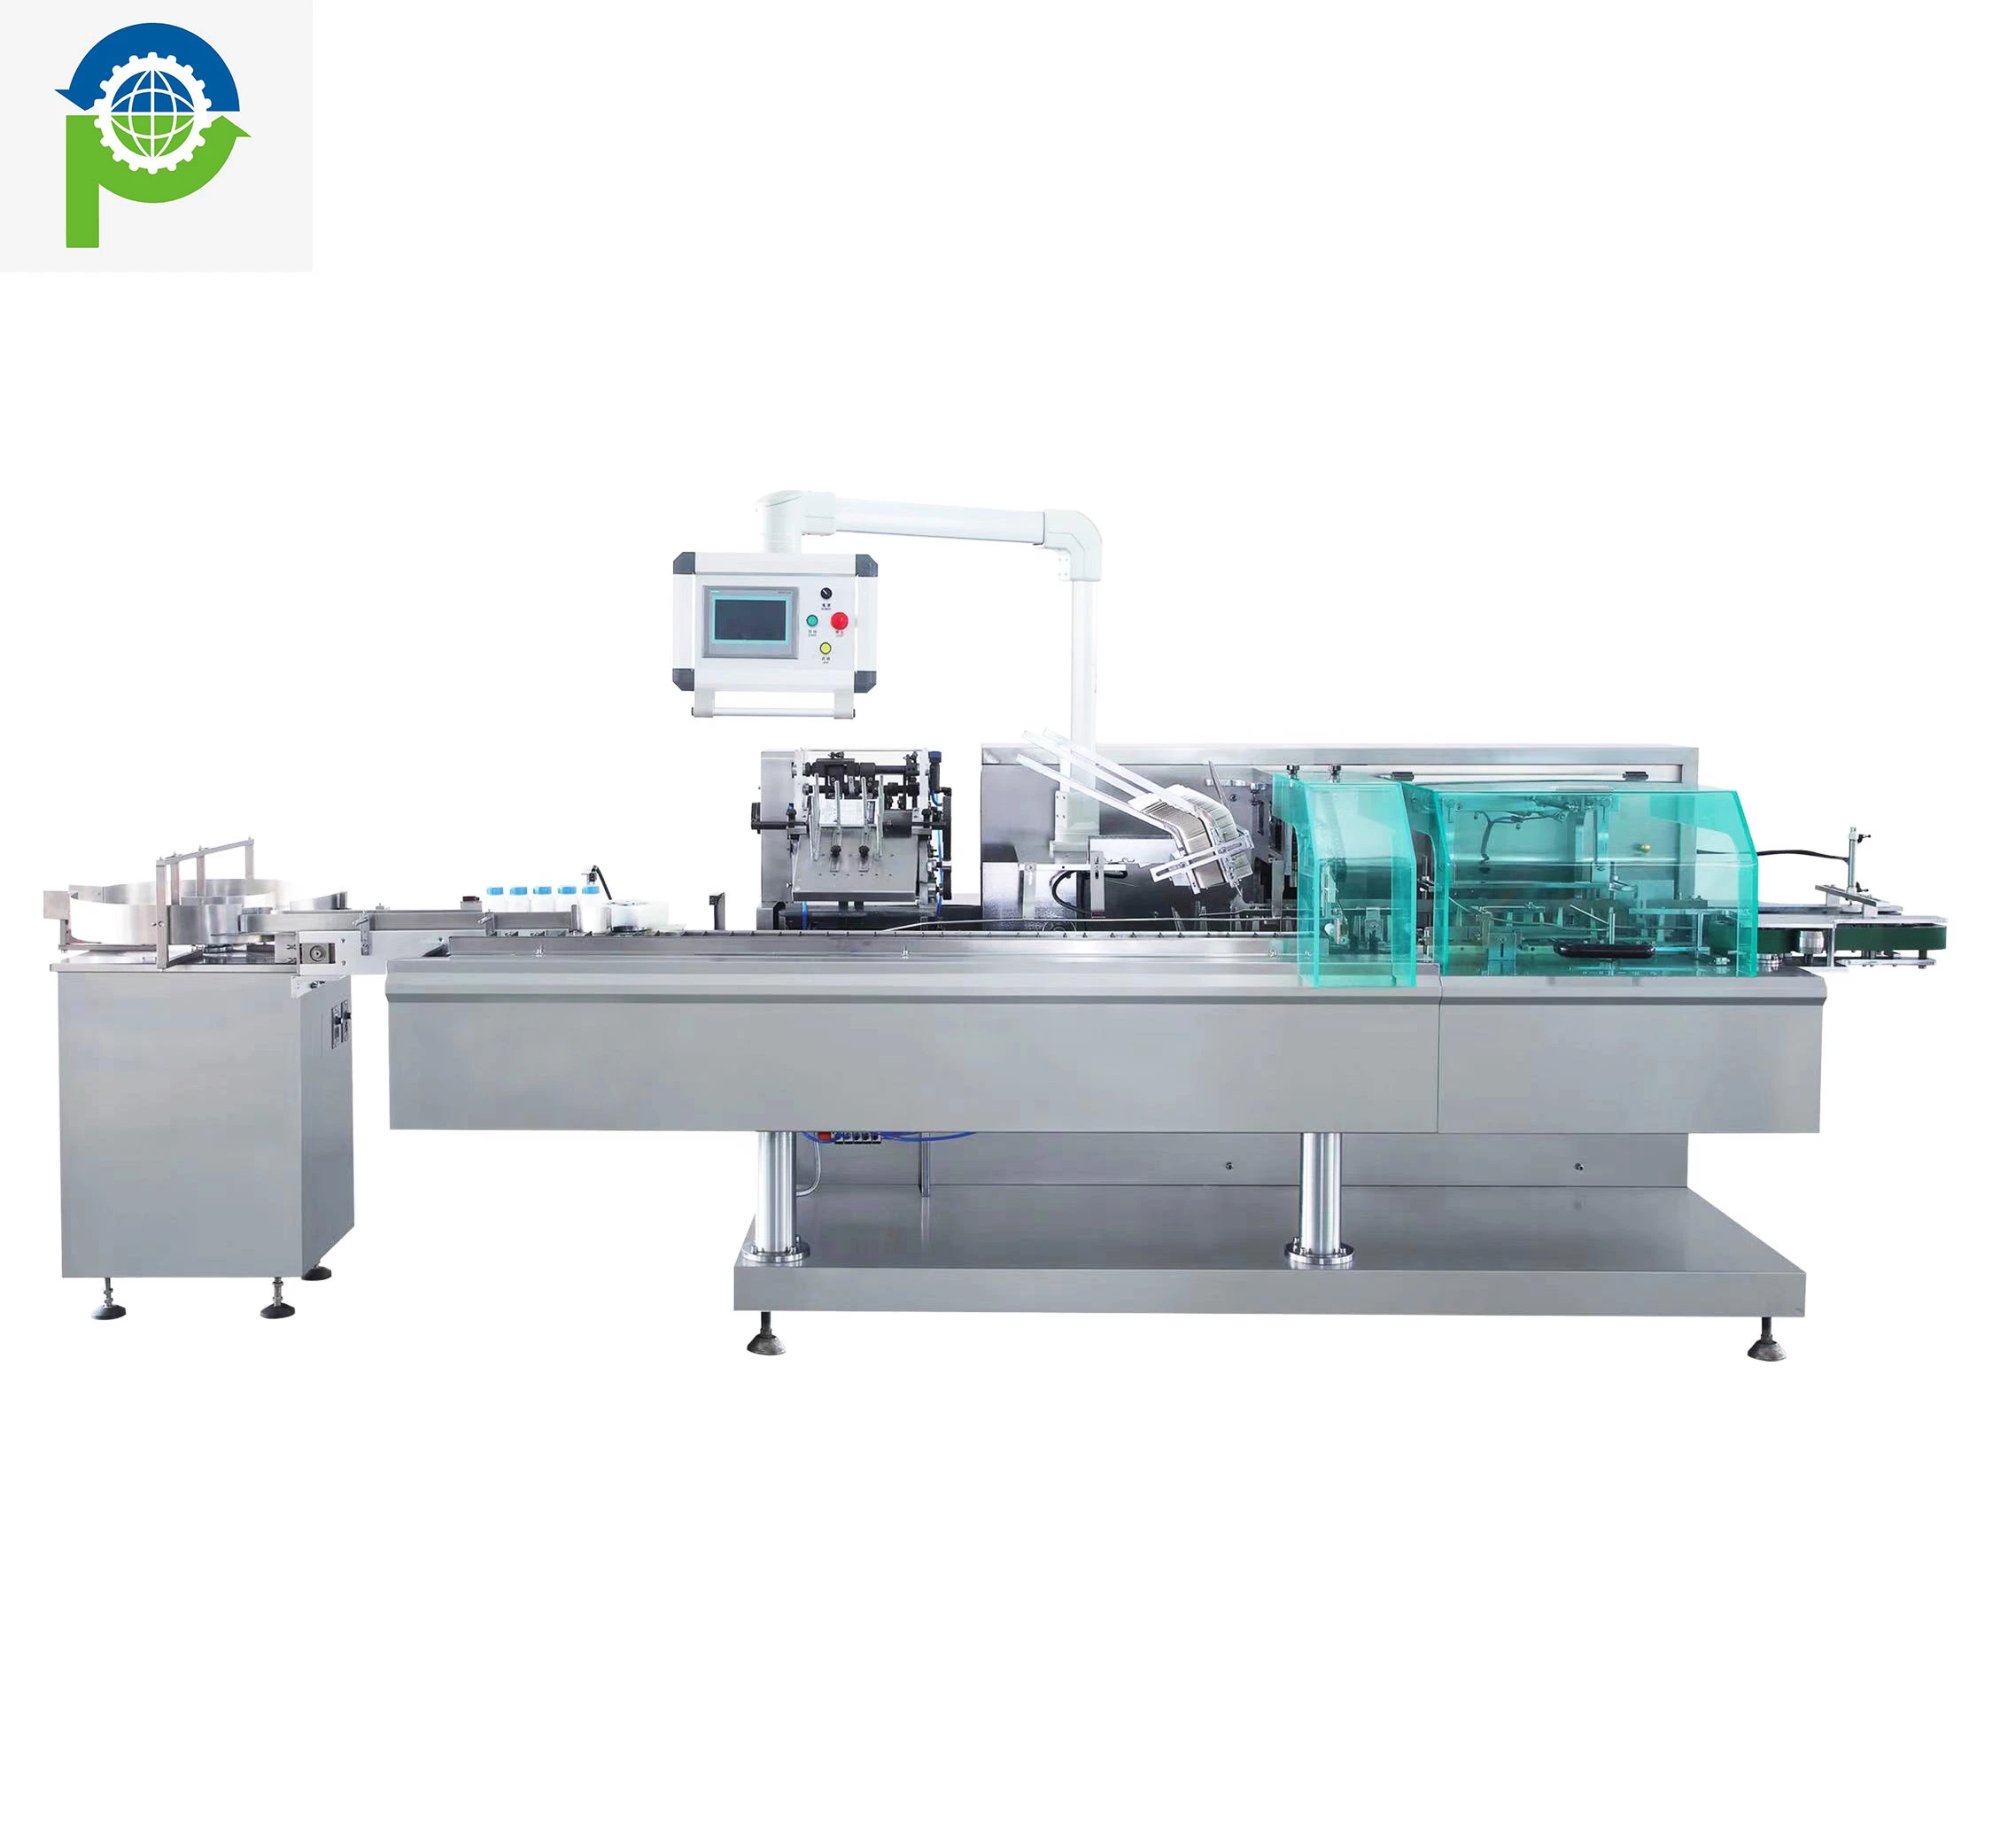 Horizontal farmacéutica de cartón automática Máquina de embalaje Caja Cartoning máquinas de fabricación en China